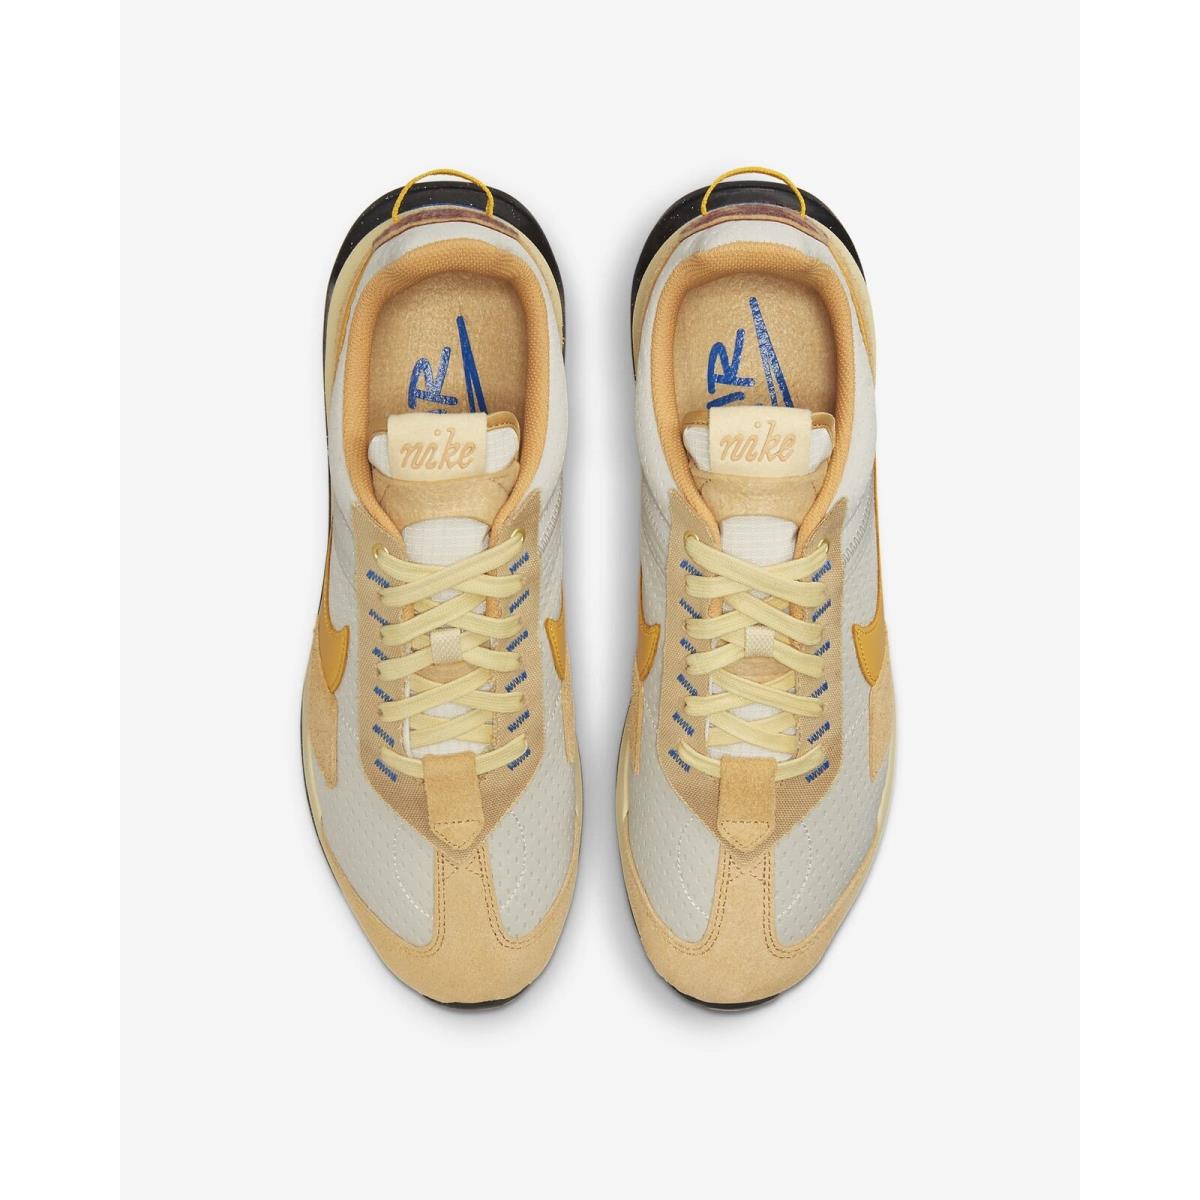 Nike shoes  - Sail/Wheat/Gold/Blue 2